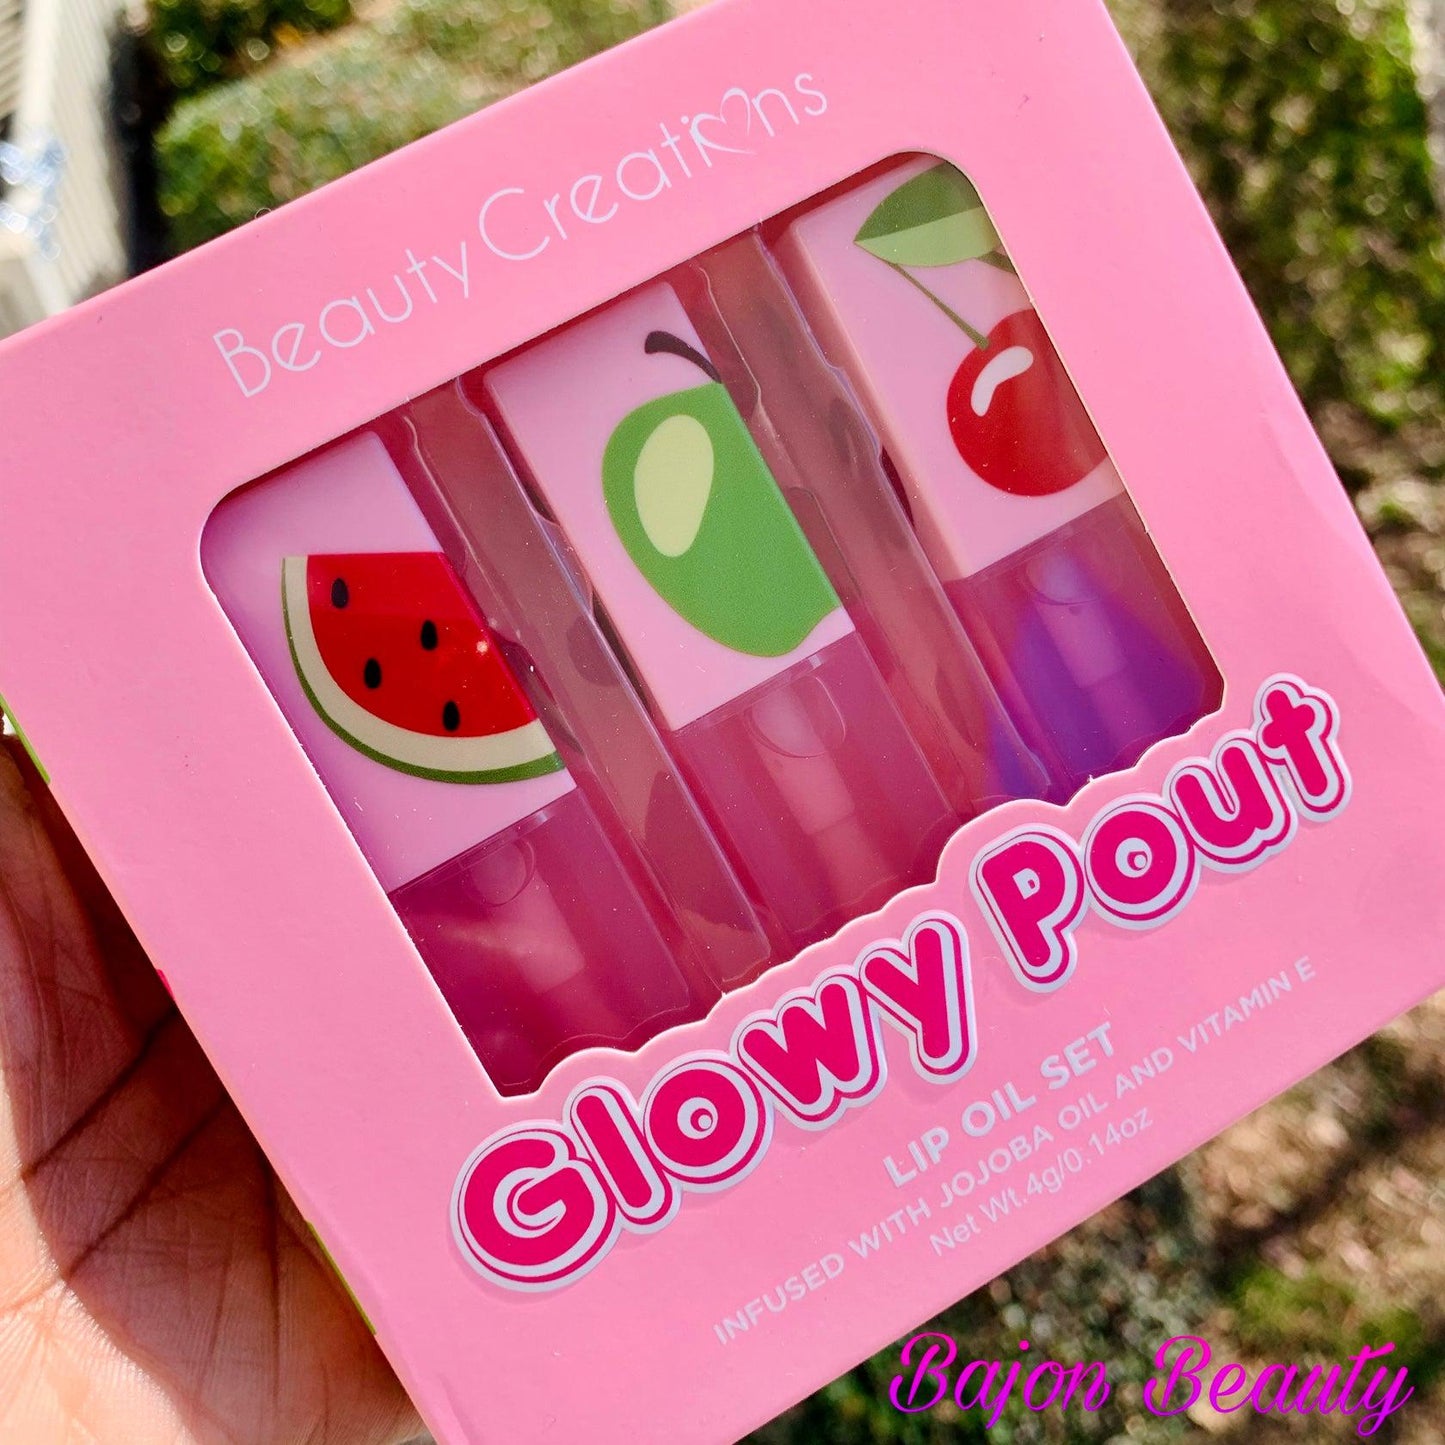 Beauty Creation - Glowy Pout Lip Oil Set